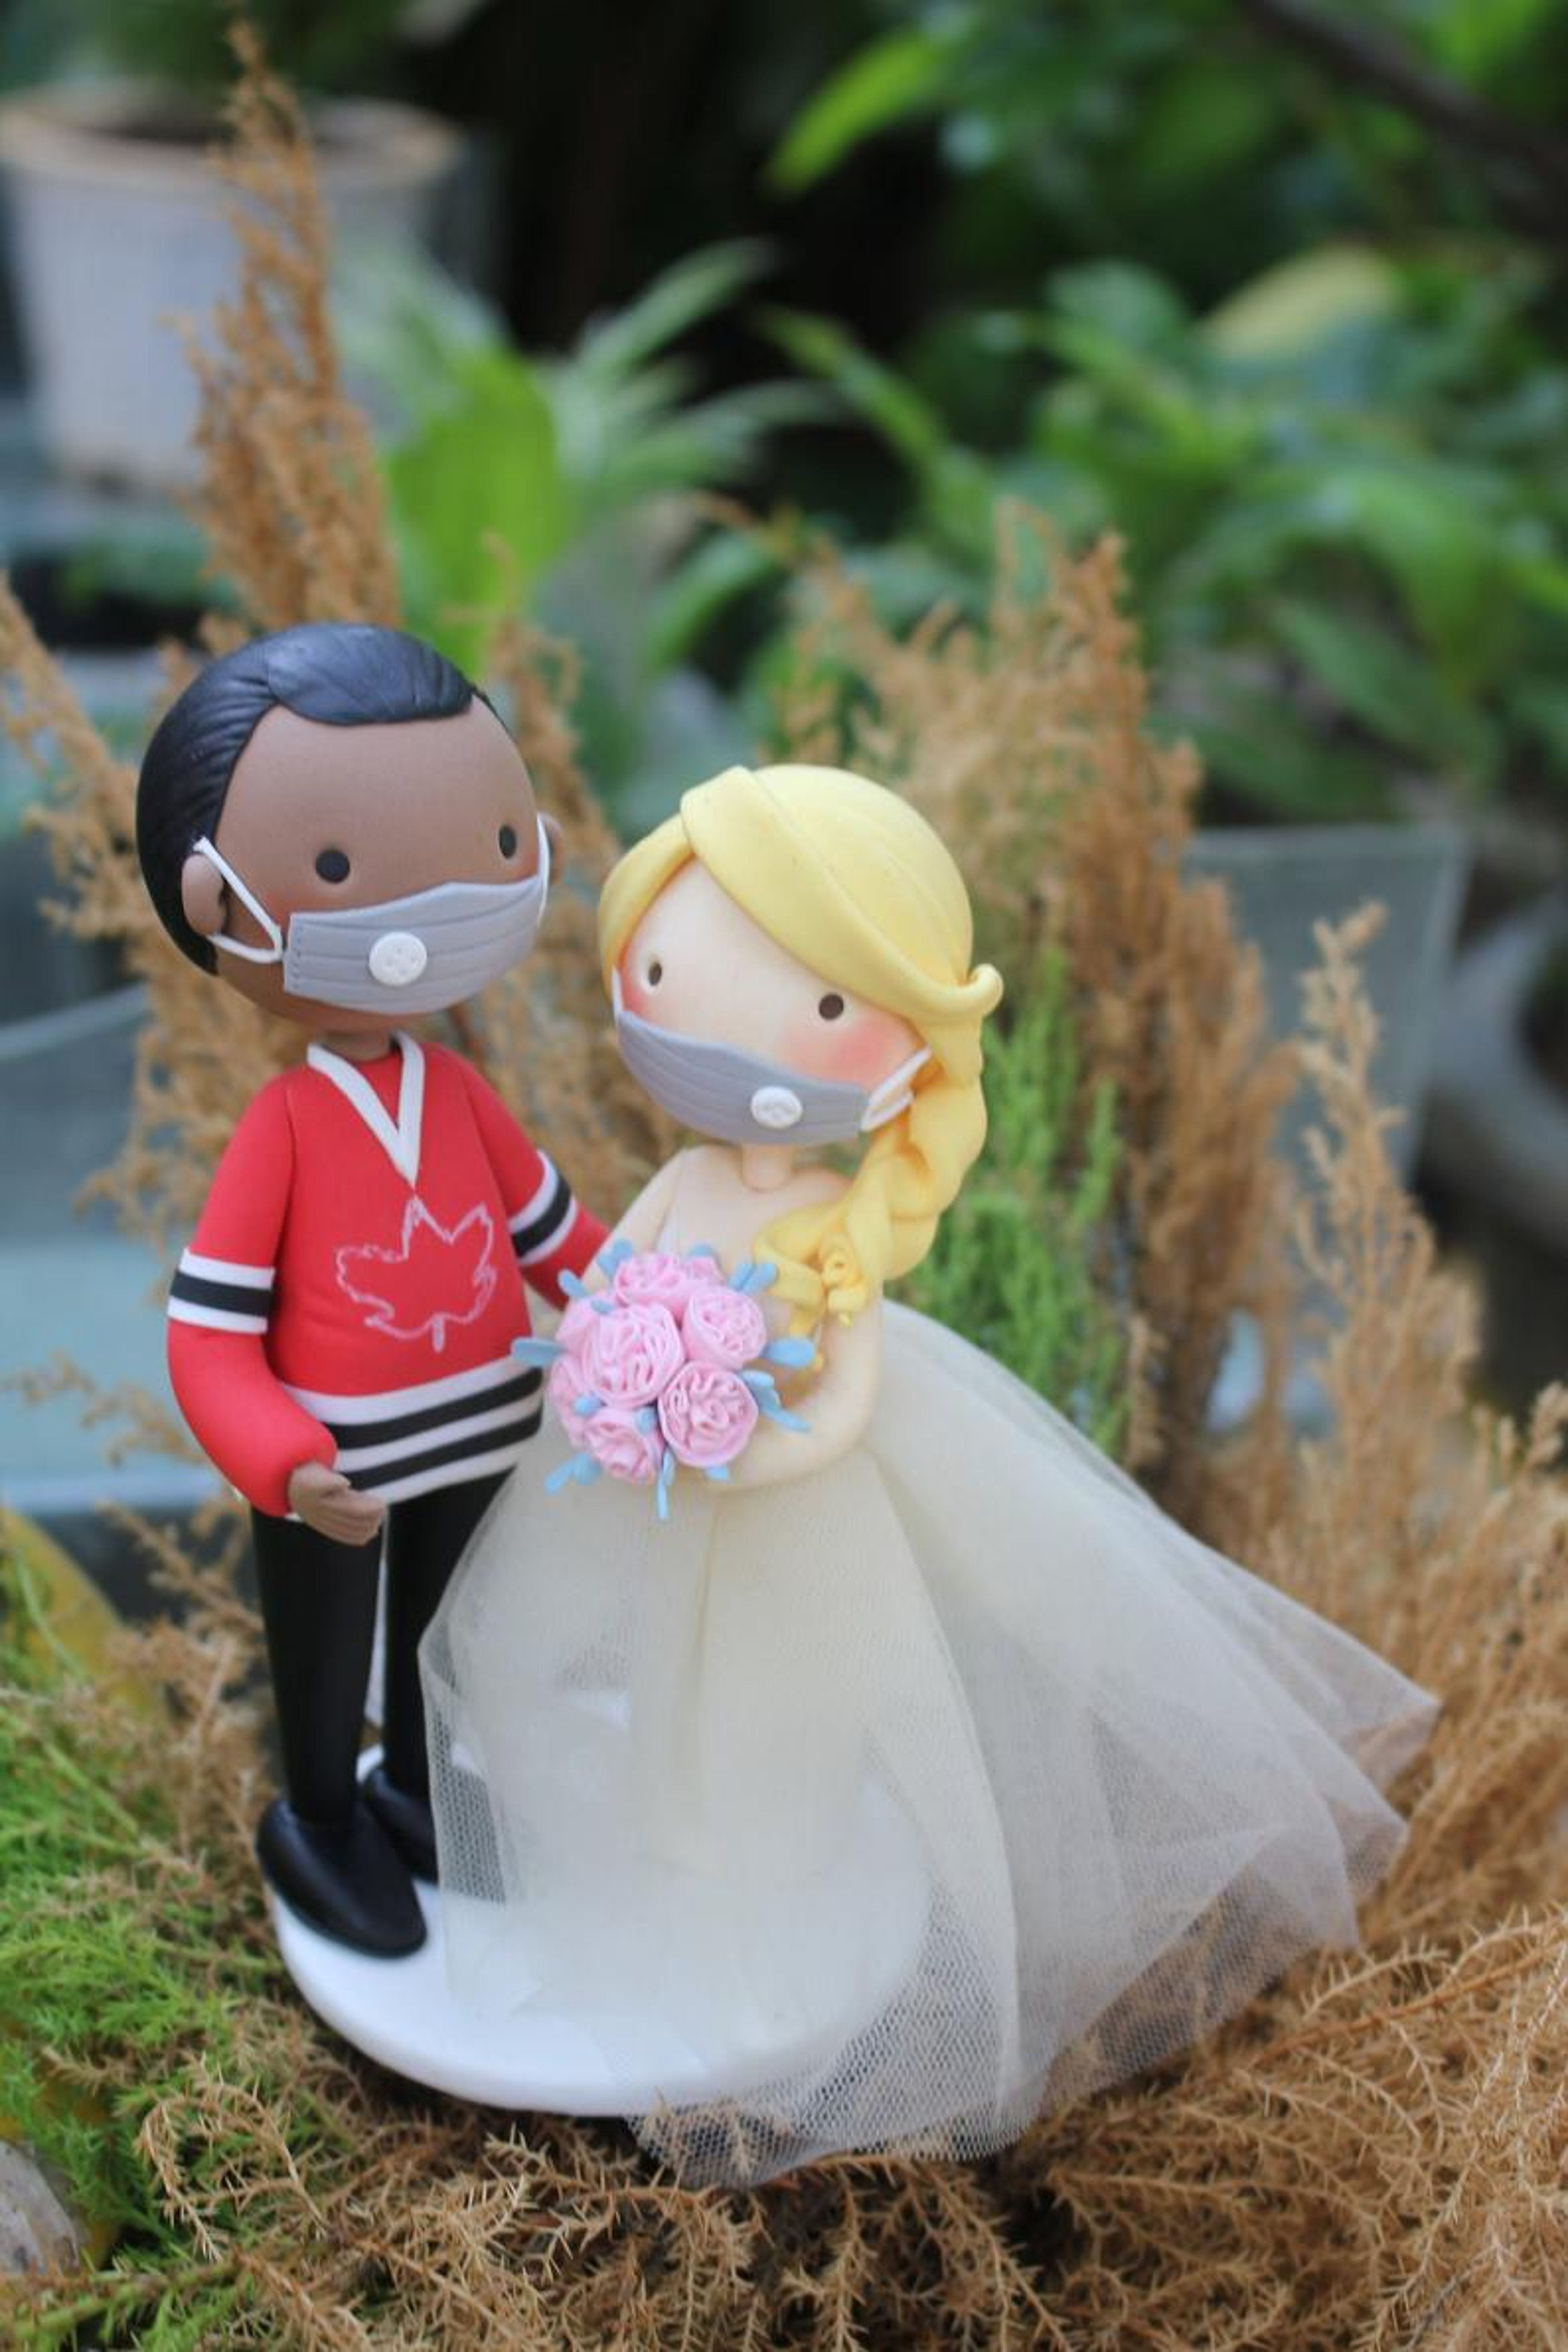 Picture of Quarantine wedding cake topper, Hockey fan wedding cake topper - CLEARANCE